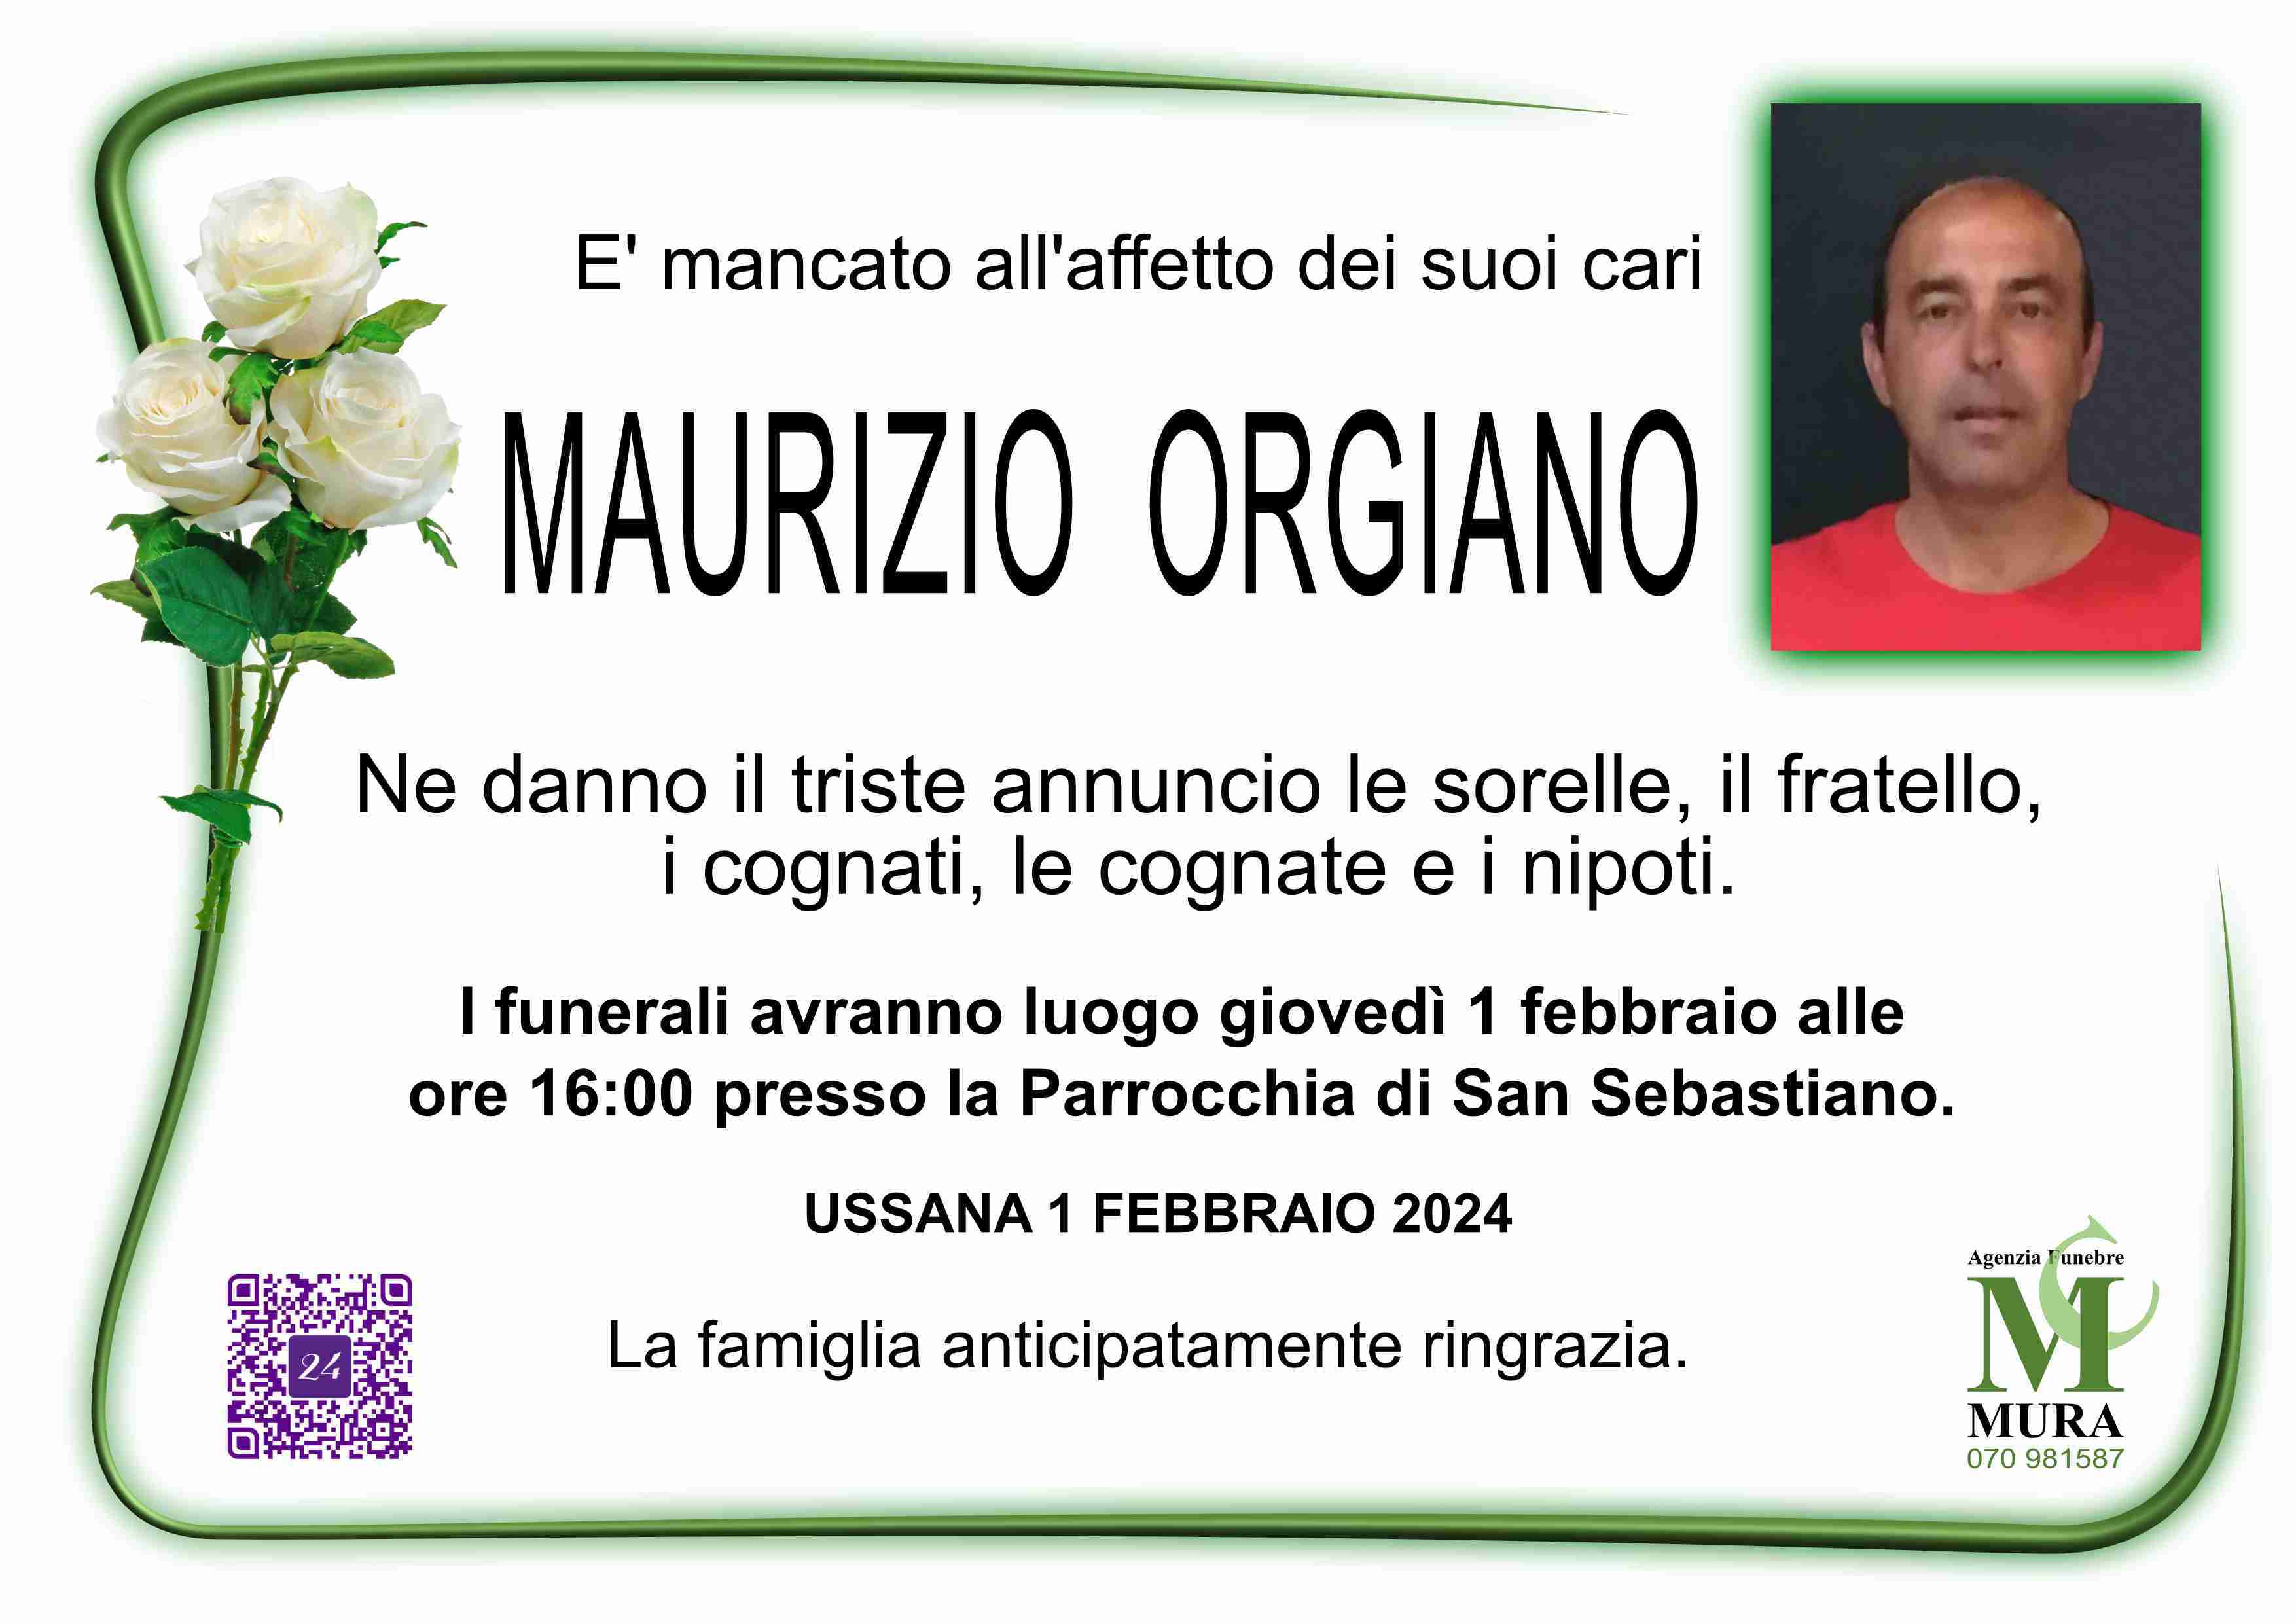 Maurizio Orgiano